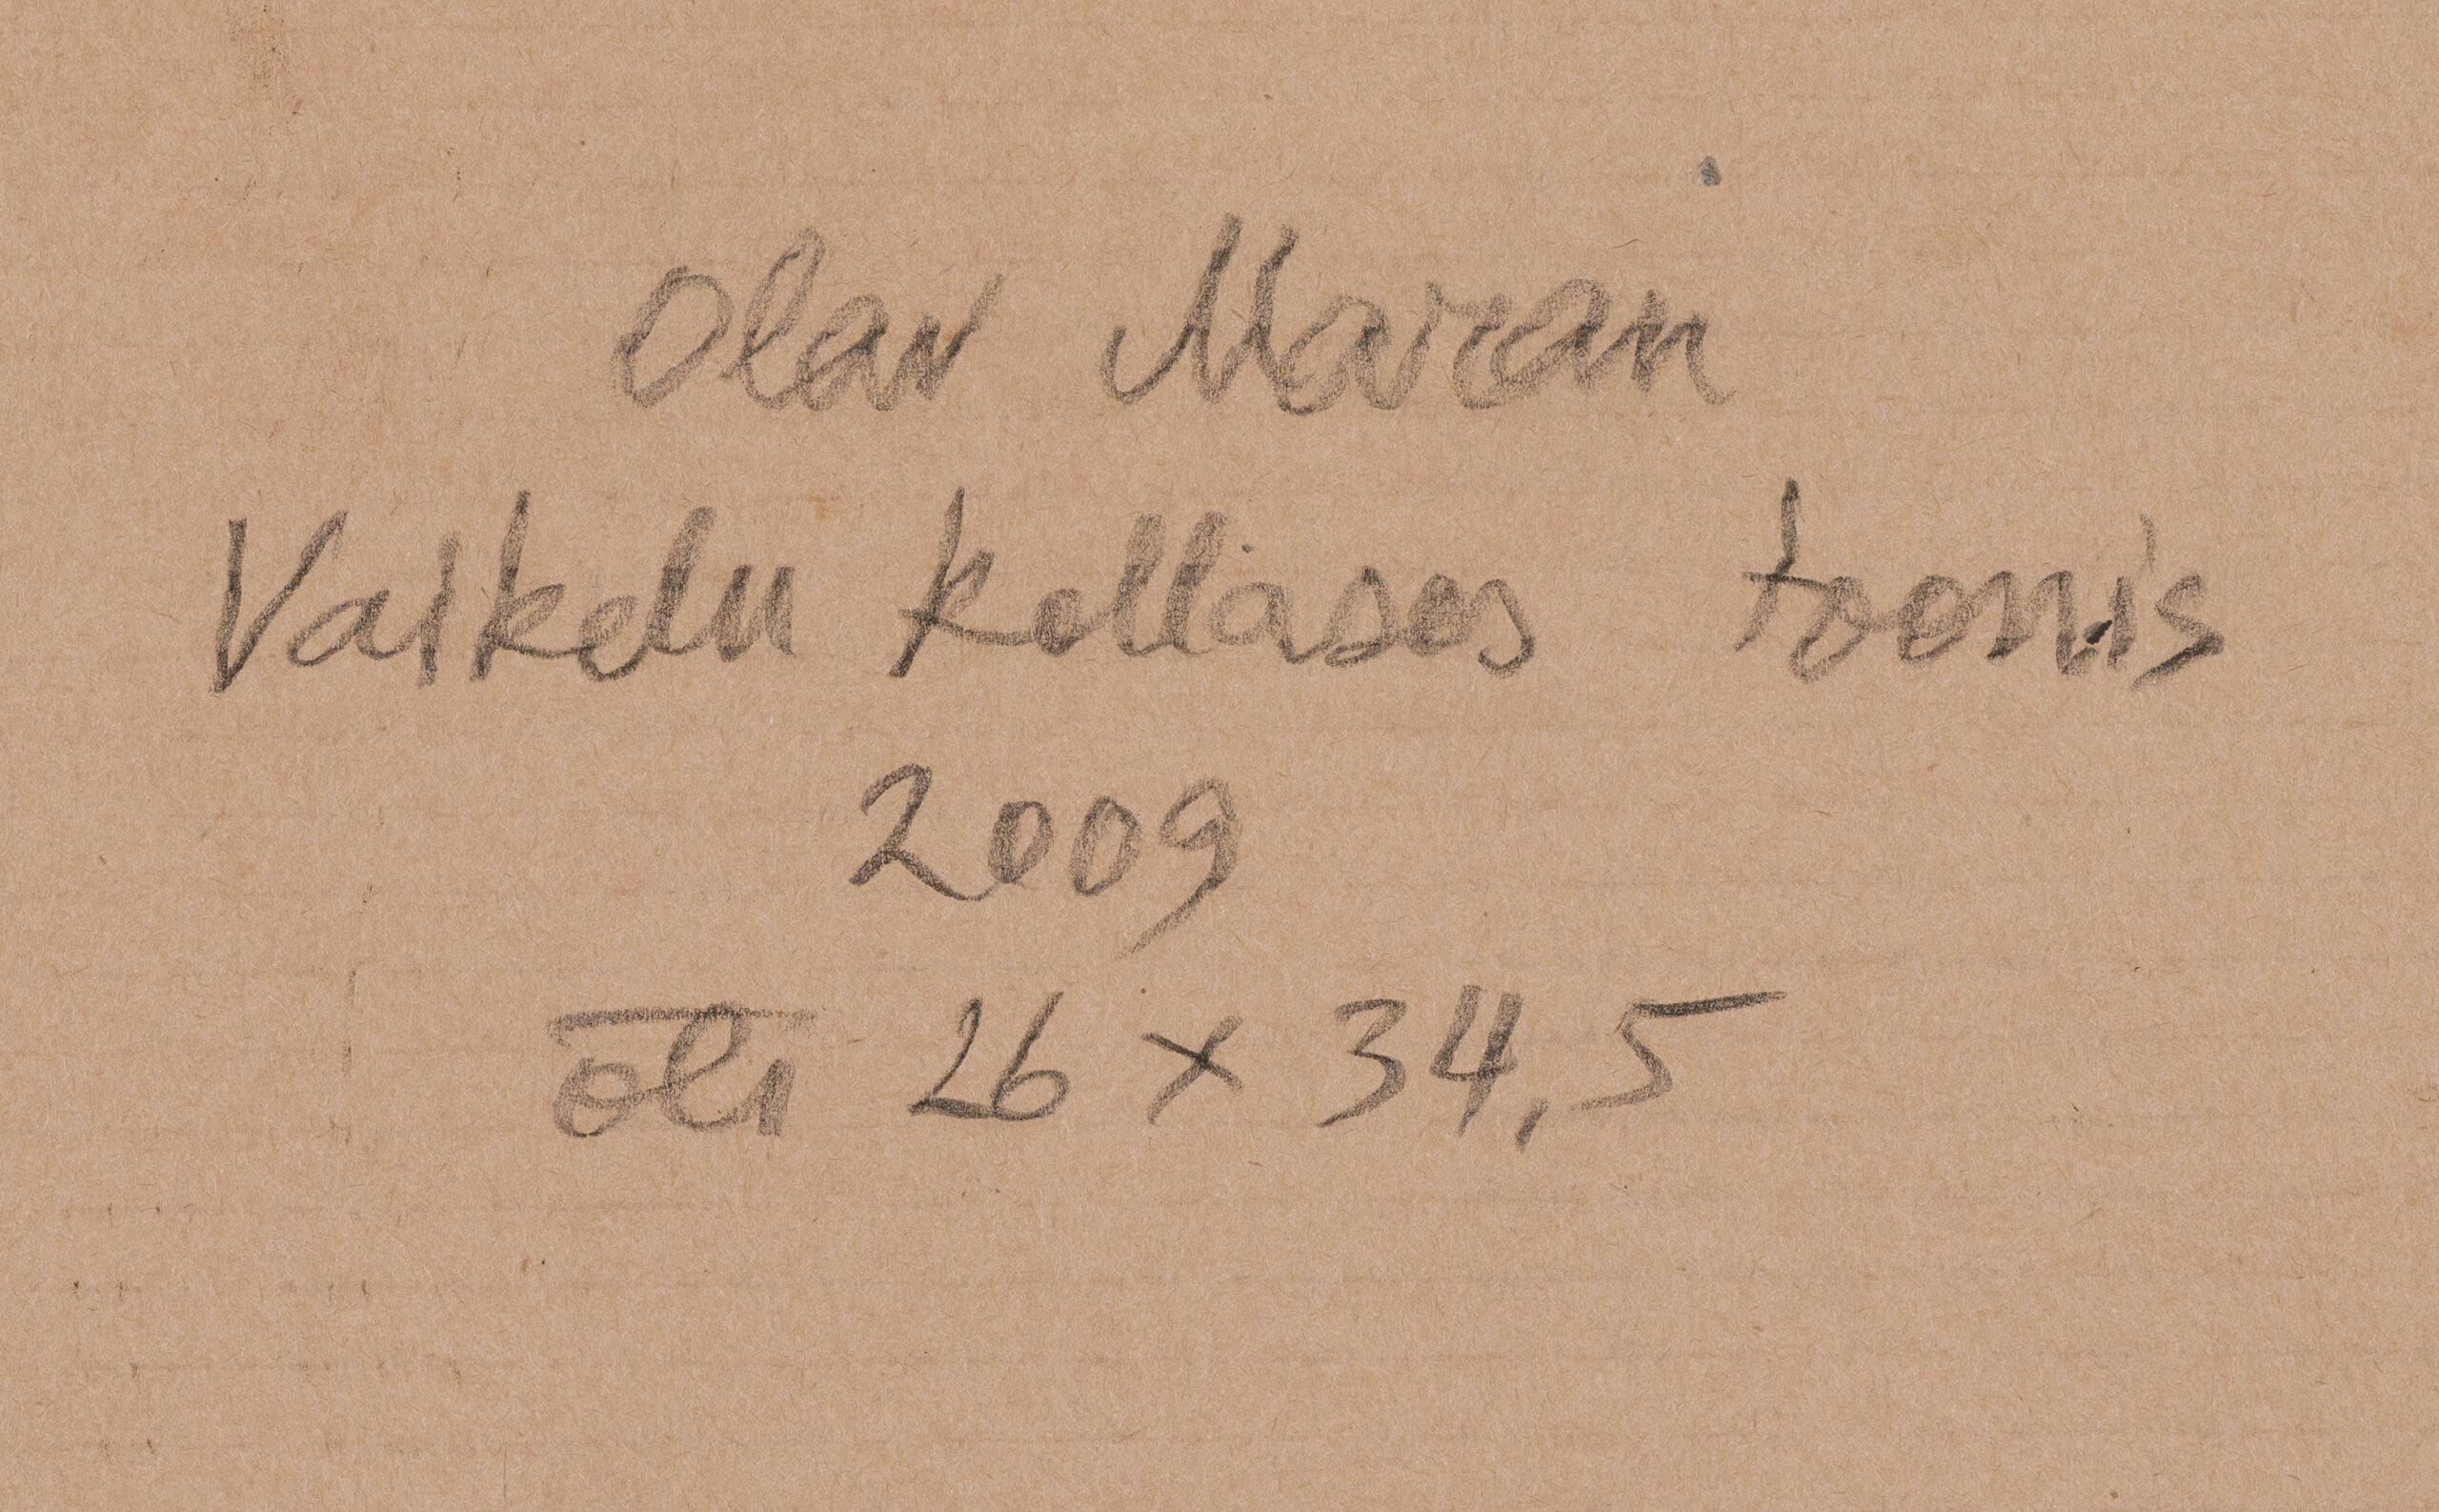 Olav Maran “Vaikelu kollases toonis”, 2009. 26 x 34,5 cm.